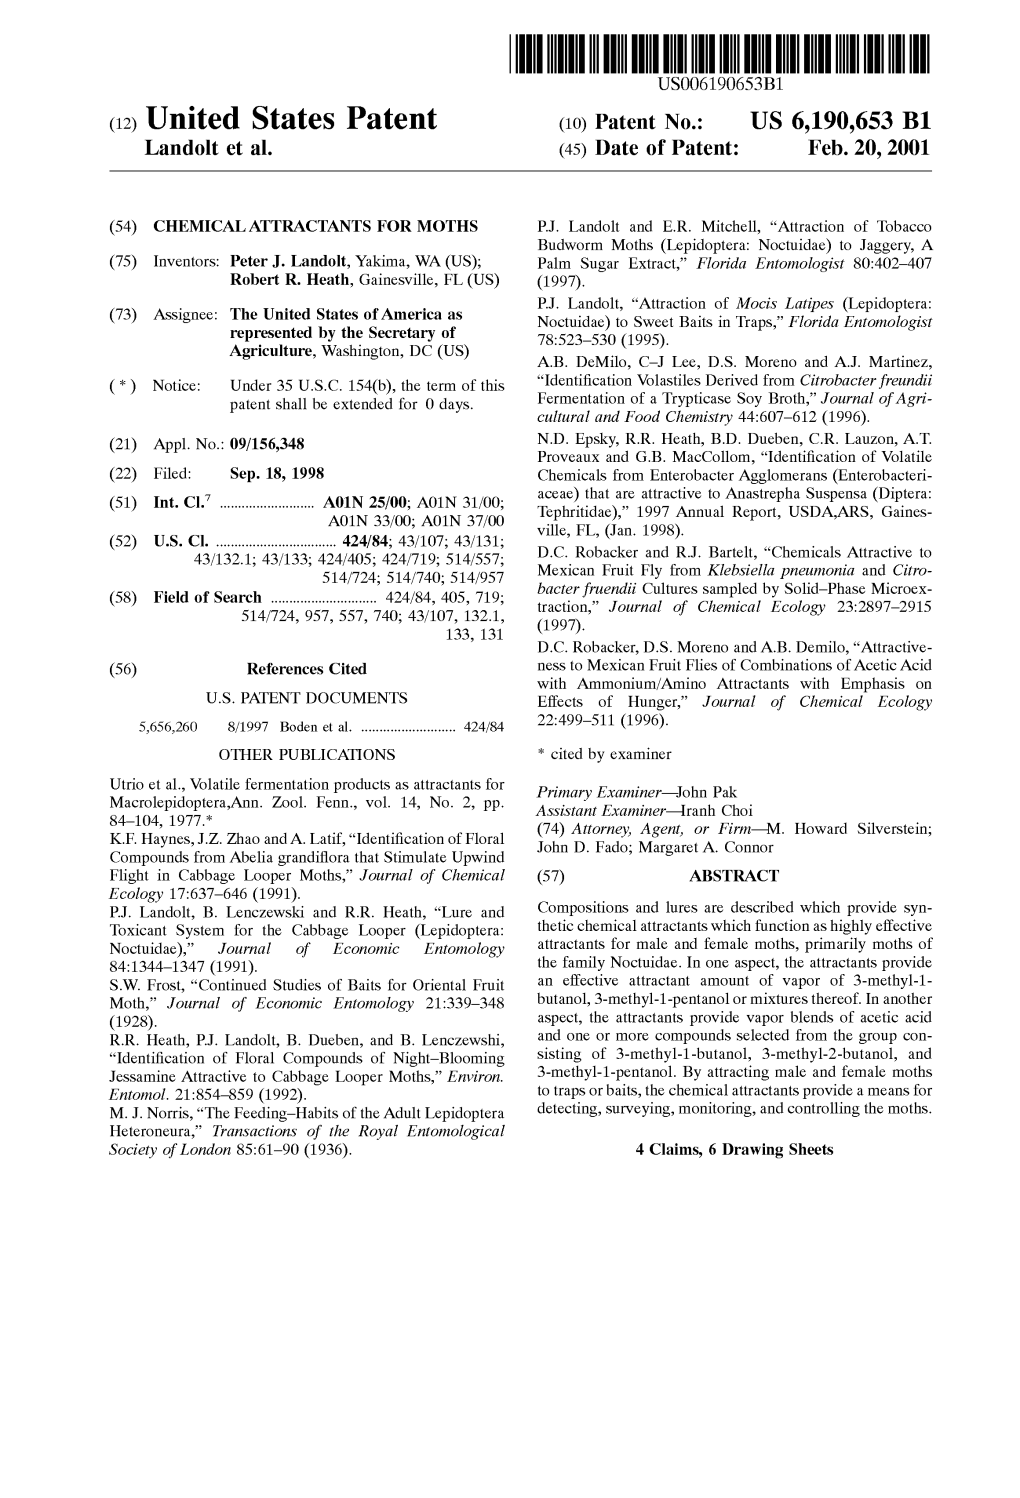 (12) United States Patent (10) Patent No.: US 6,190,653 B1 Landolt Et Al